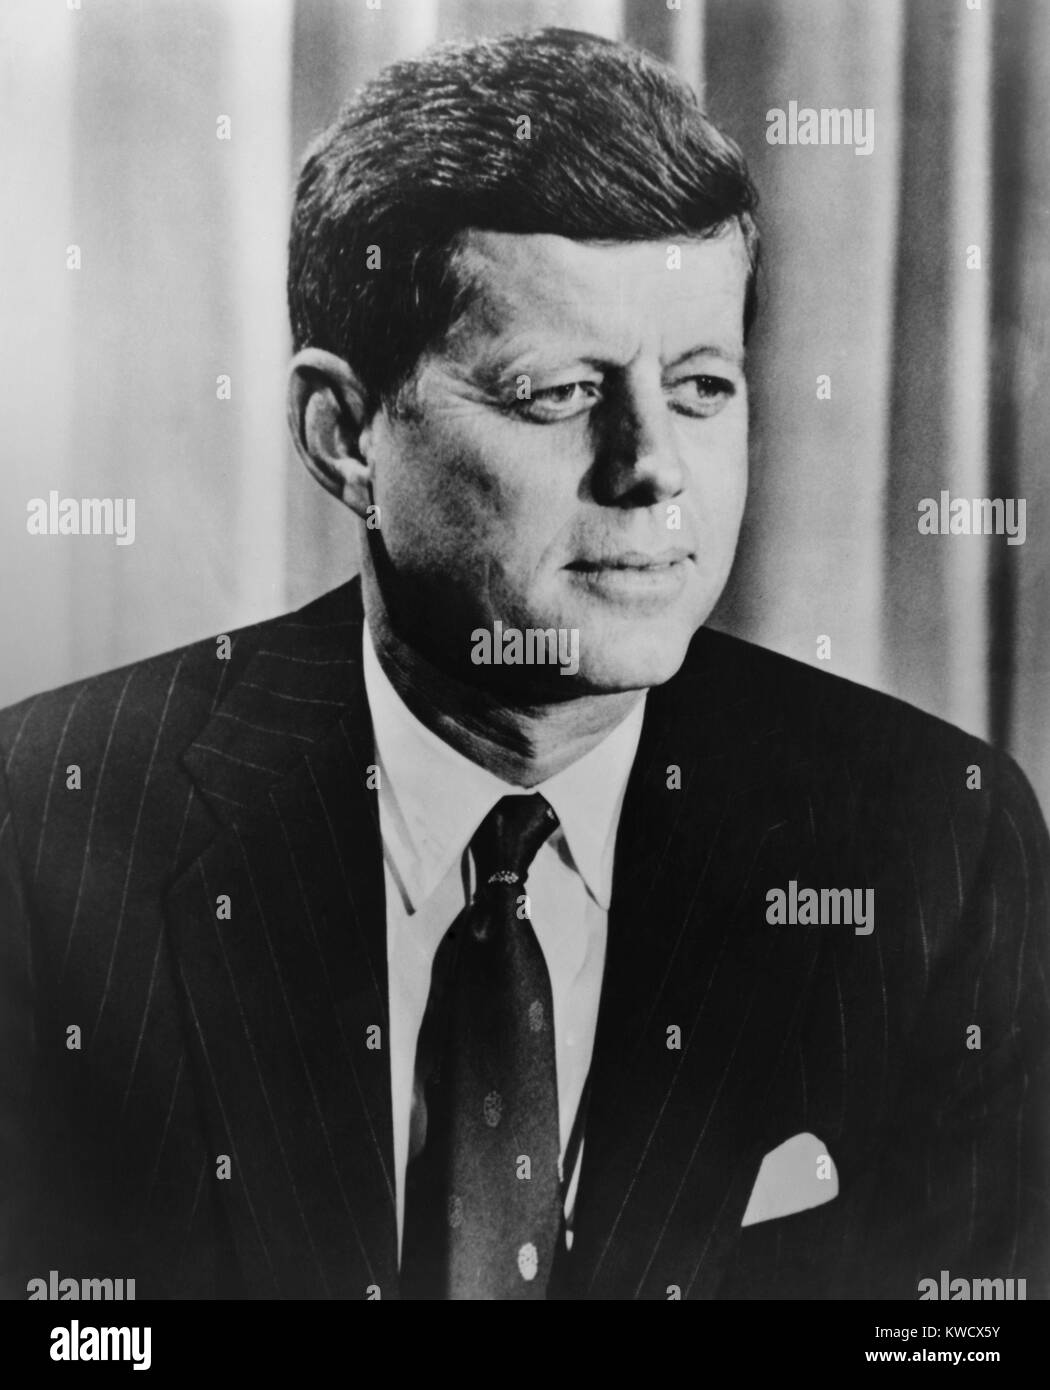 Präsident John F. Kennedy, C. 1960-1963. (BSLOC 2017 2 195) Stockfoto